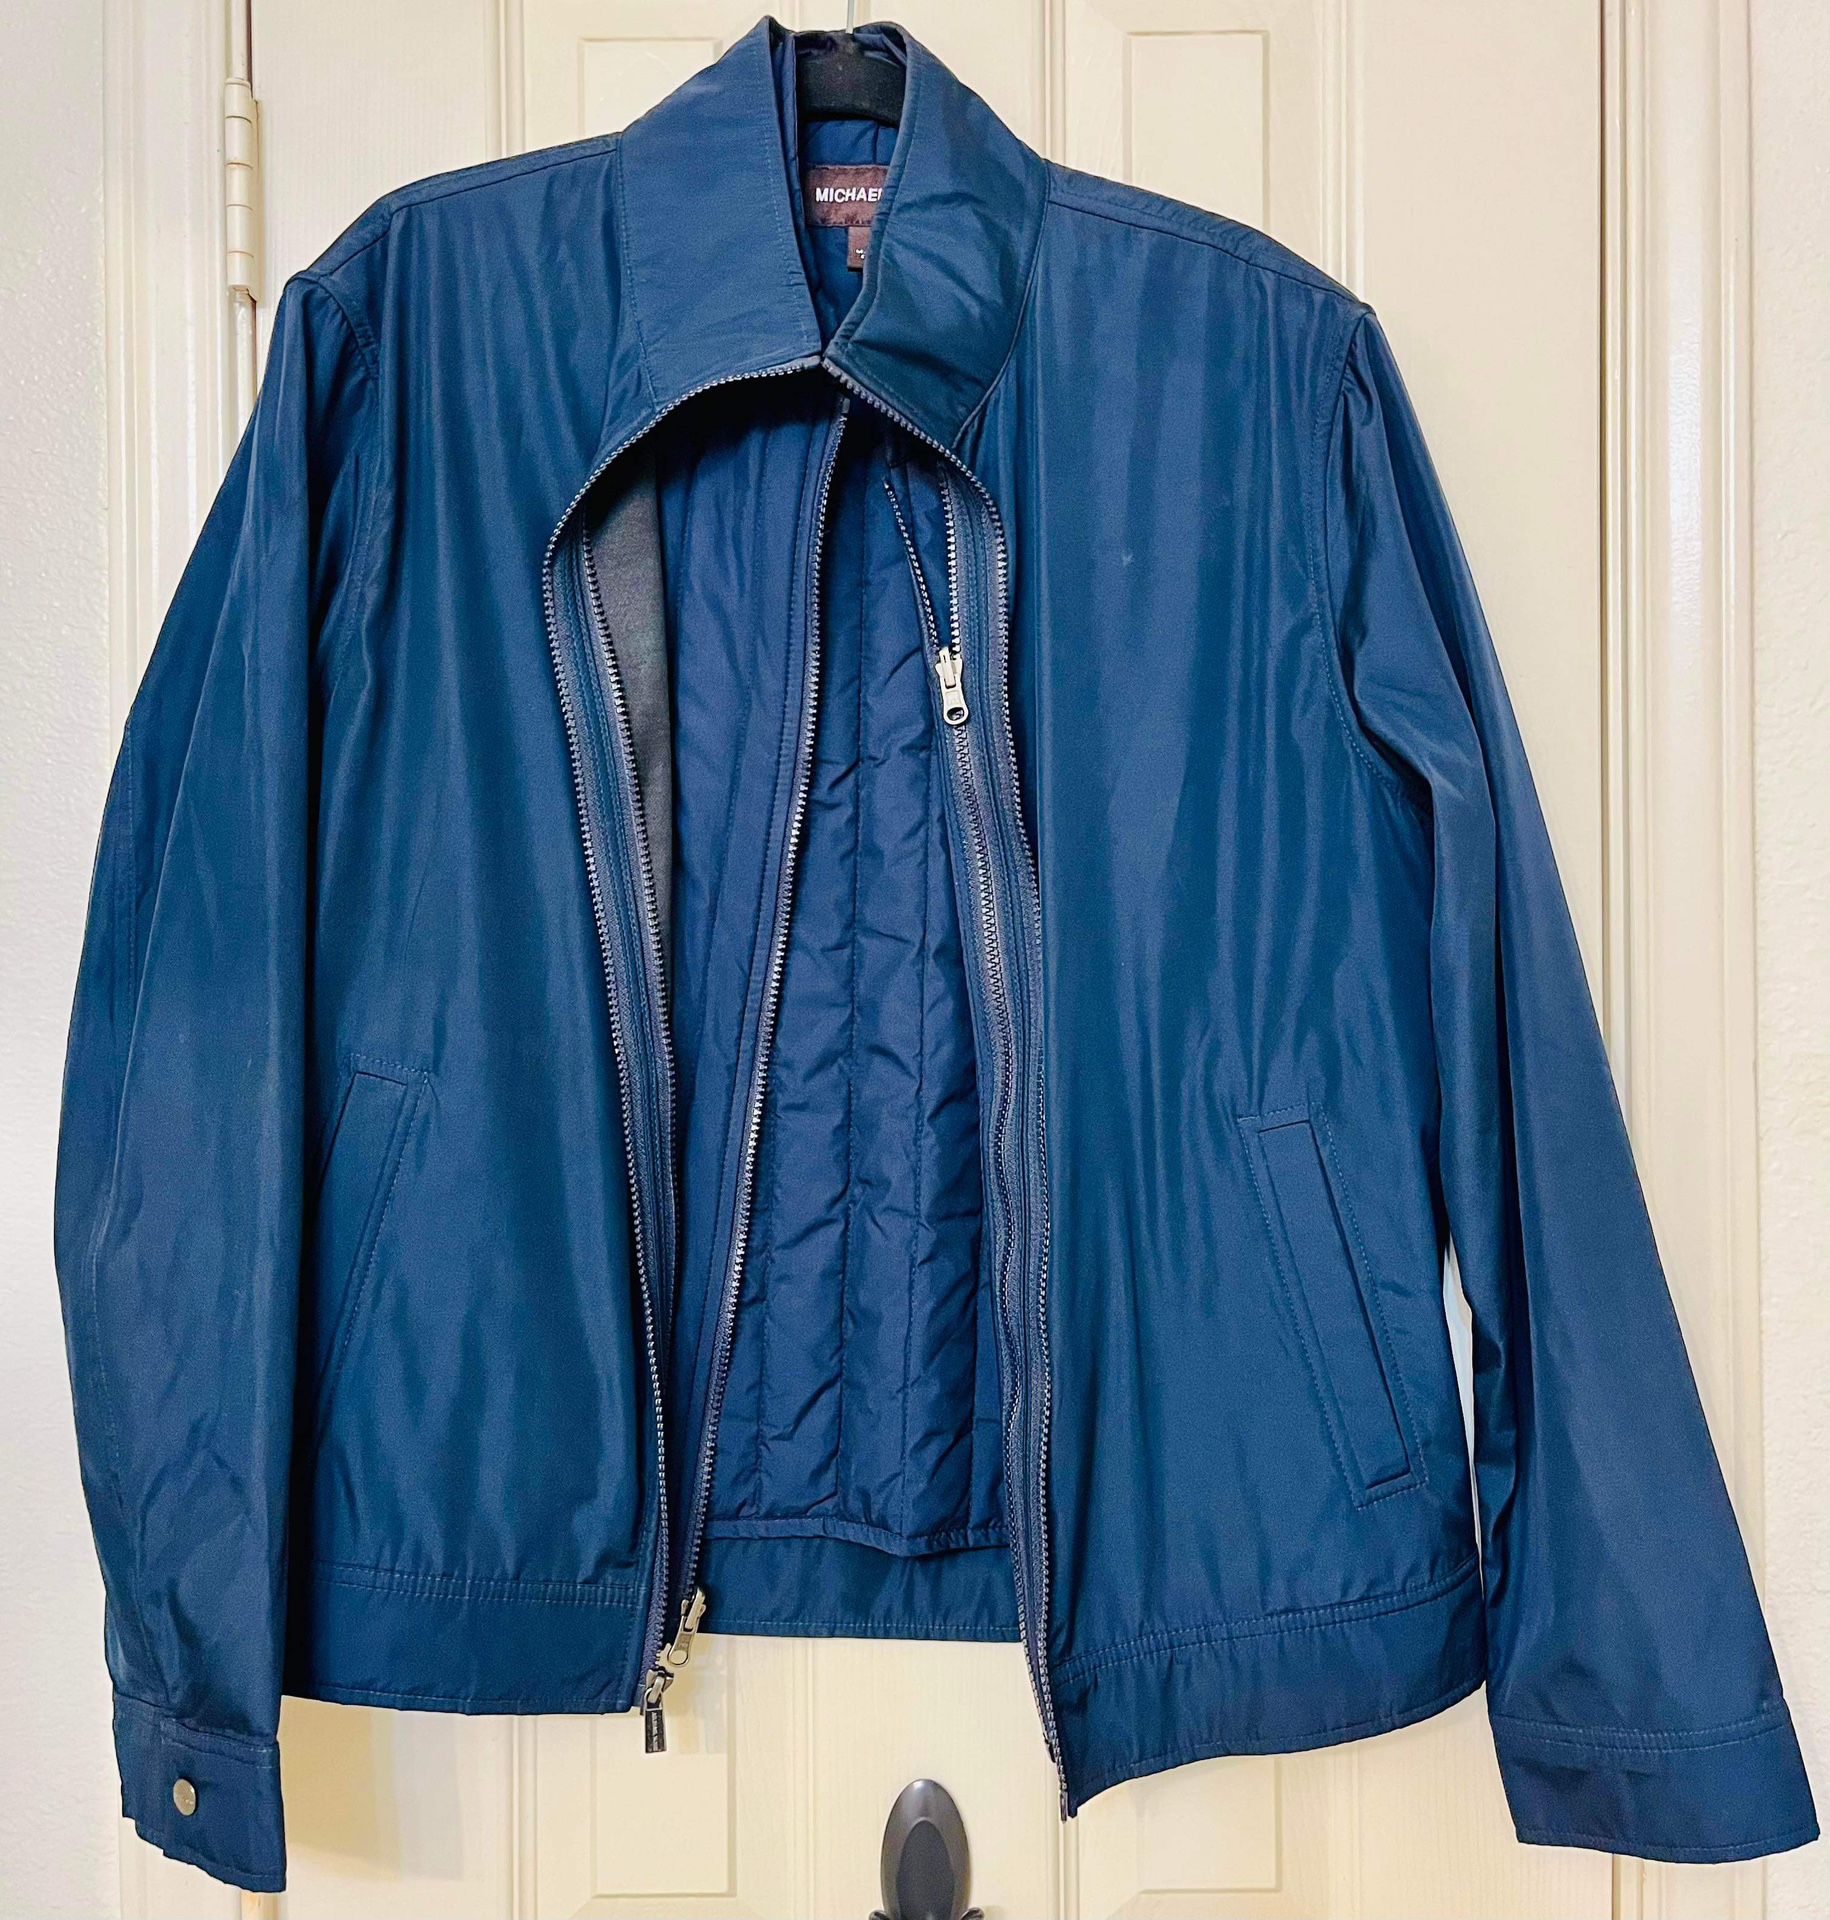 Michael Kors 3-in-1 Zip-up Track Jacket with Vest - Men’s Size M